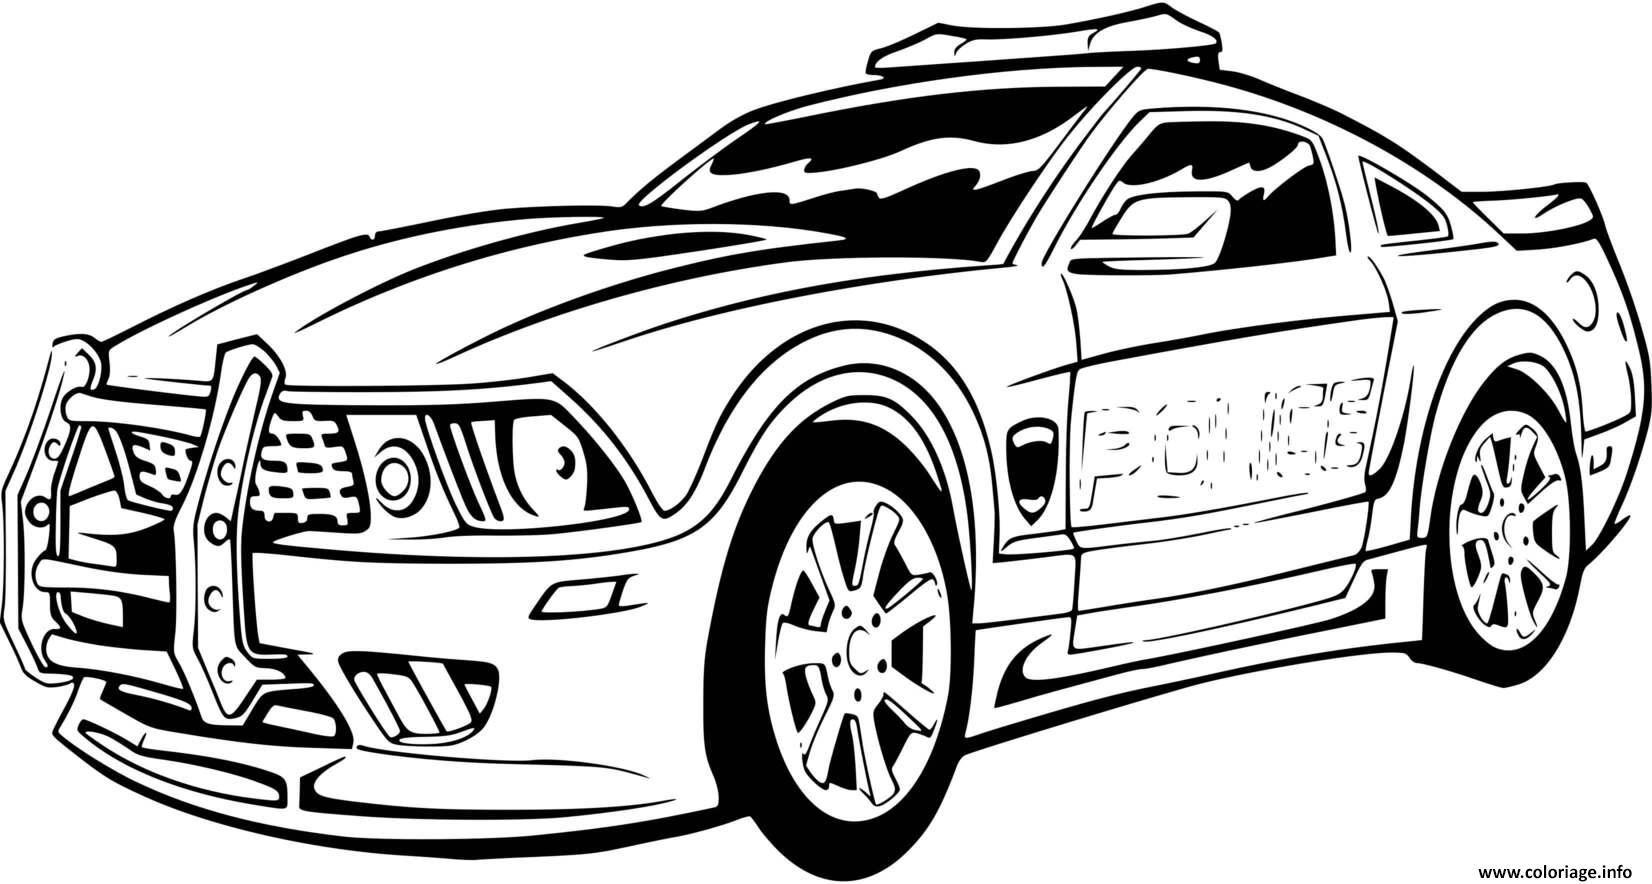 Coloriage Voiture De Police Sport Mustang Ford Dessin à ...